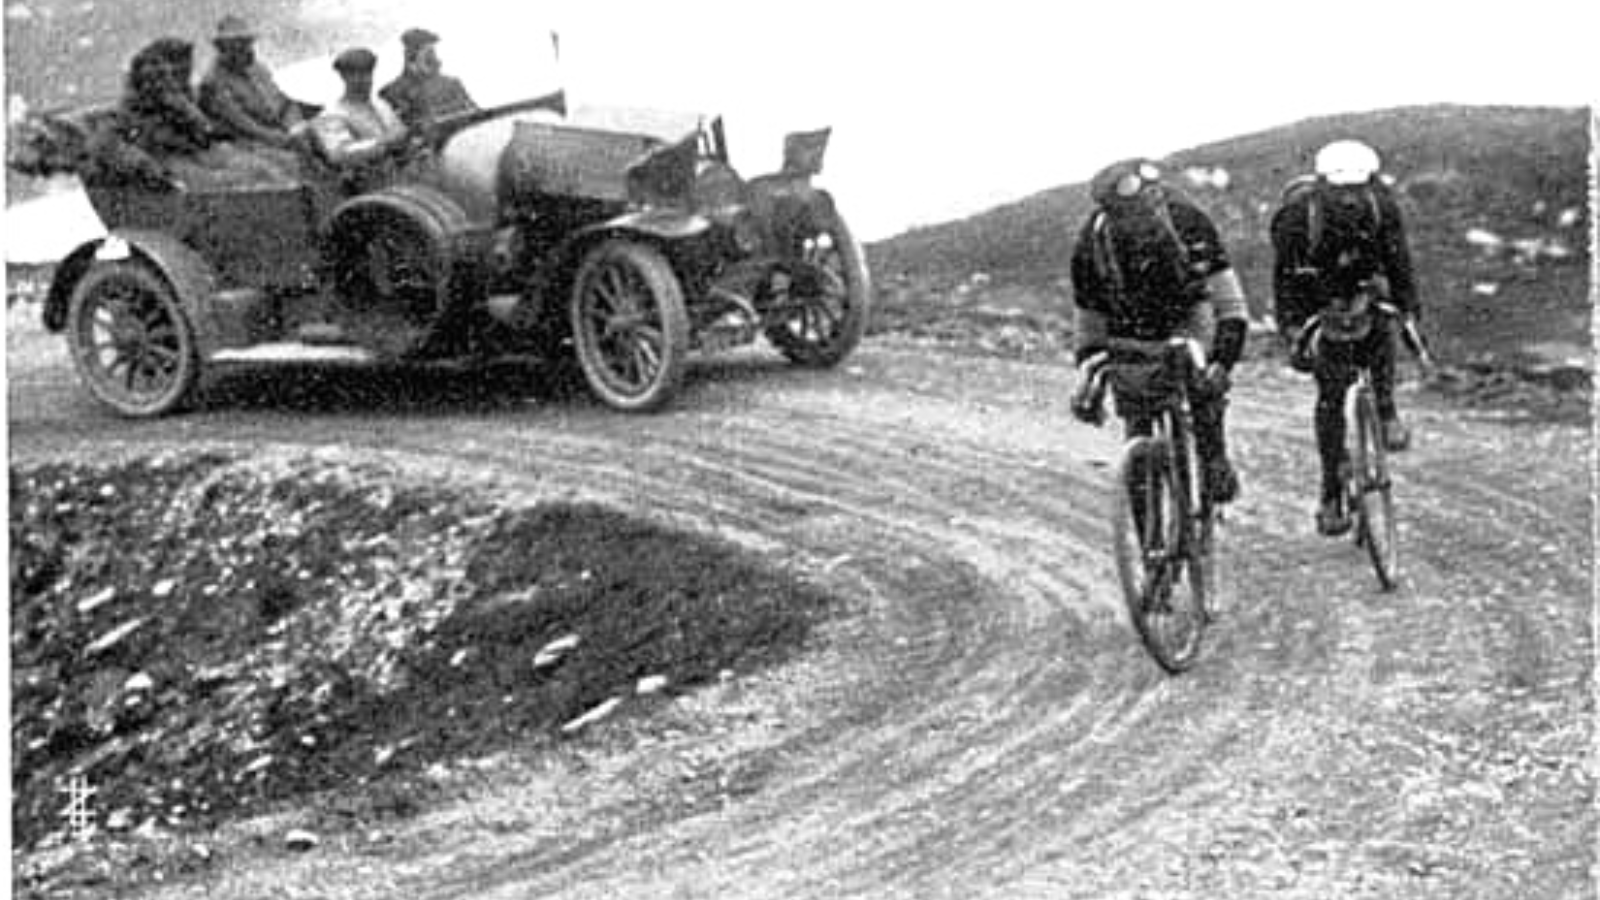 François Faber (left) and Gustave Garrigou on the Galibier at the Tour de France 1913.